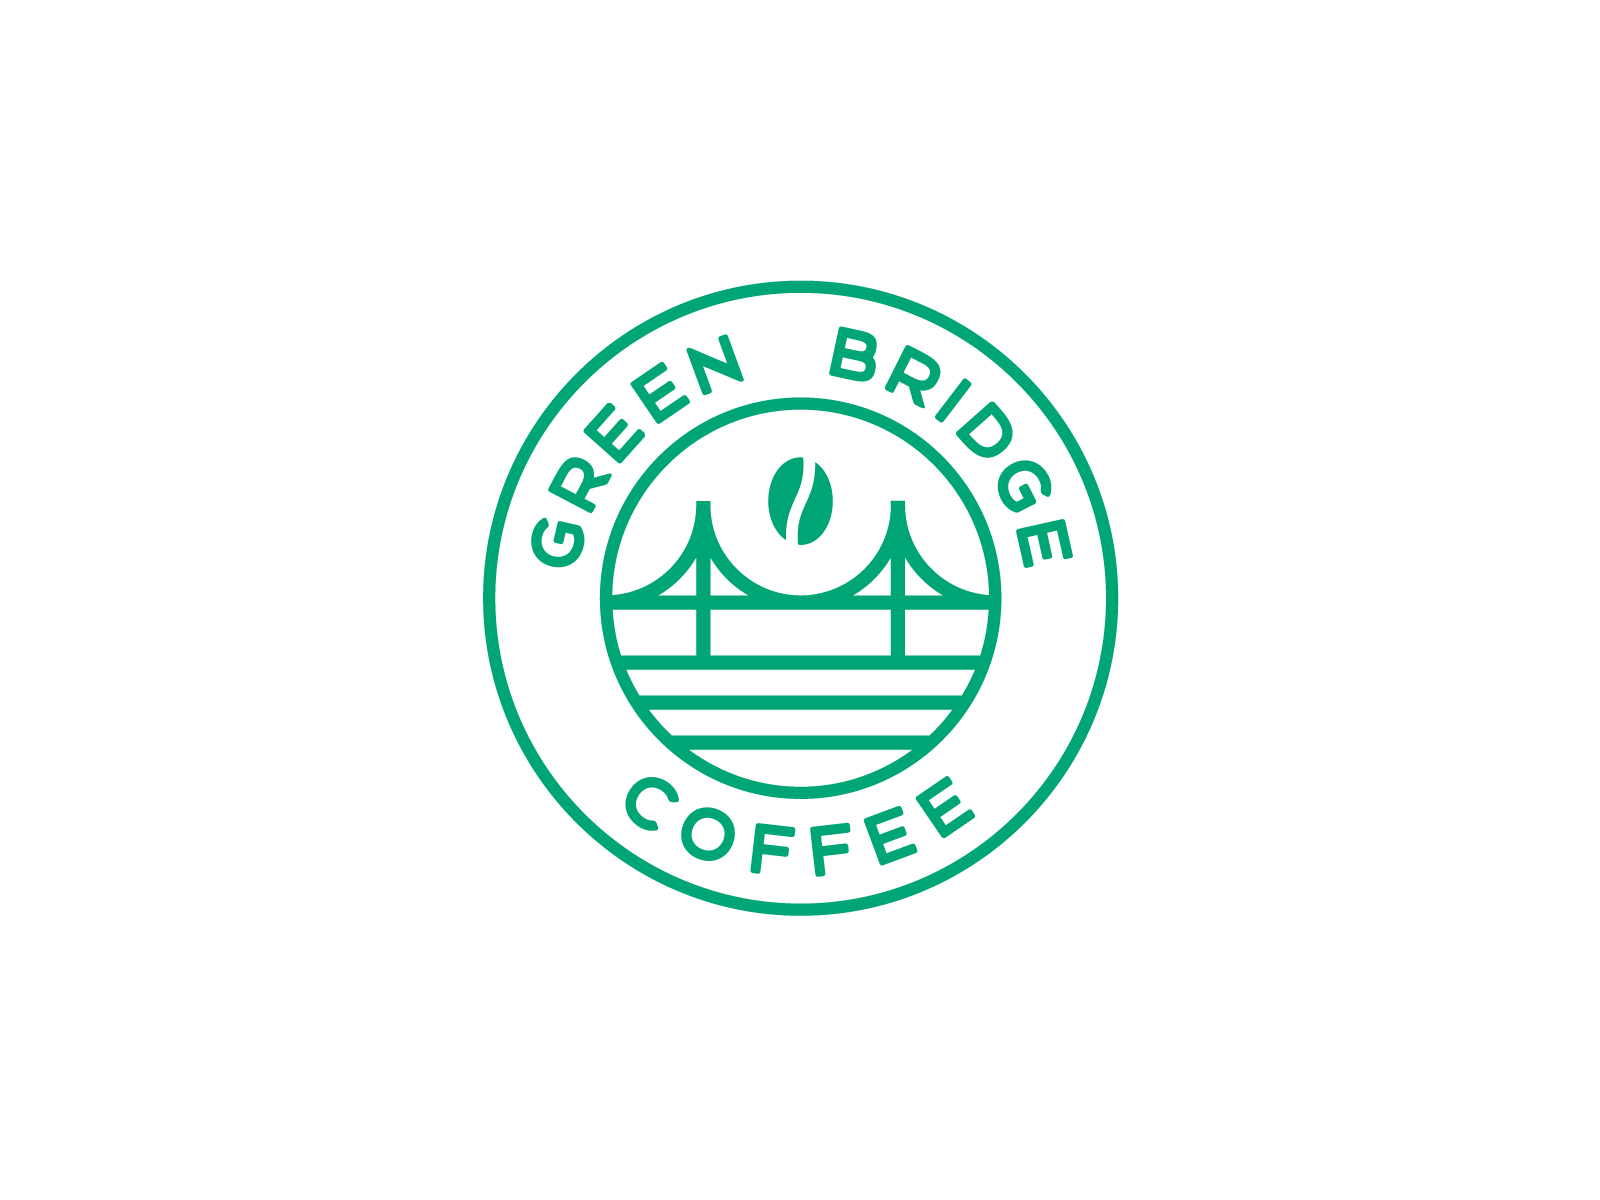 Green Bridge Coffee: Community Blend Partner Donation